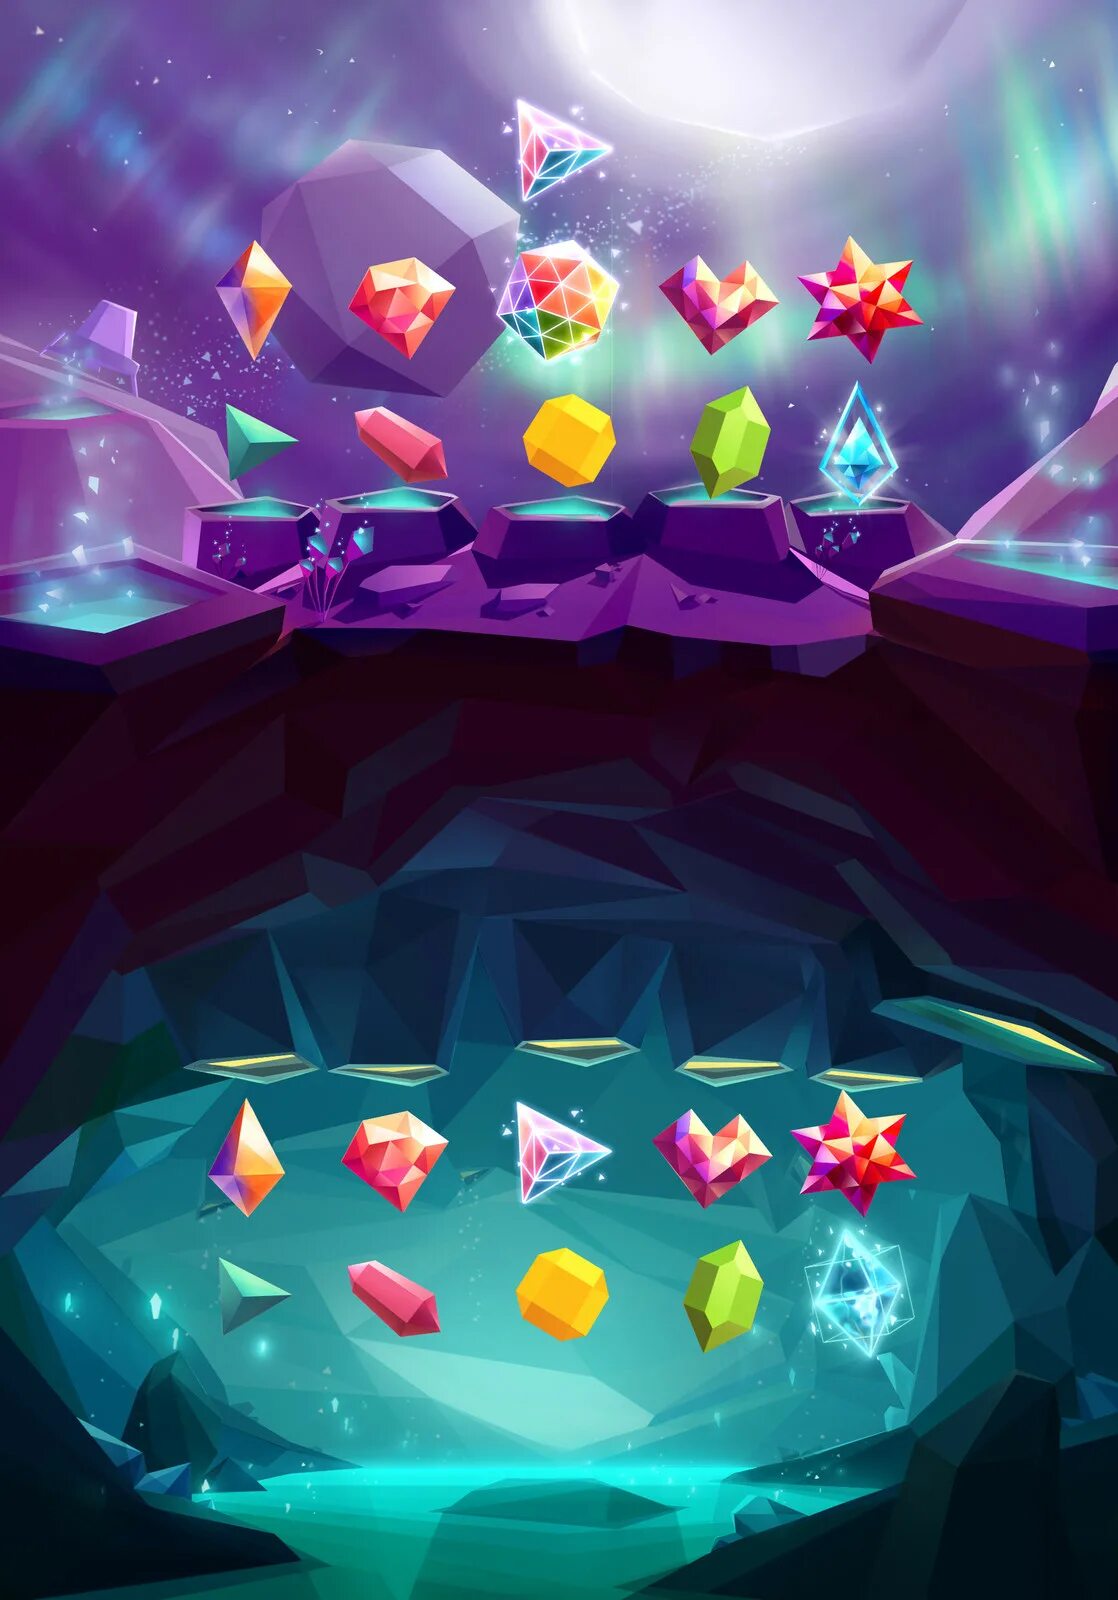 Crystal game. Кристаллики Даймонд игра. Кристаллы из игр. Магический Кристалл игра. Царство кристаллов.